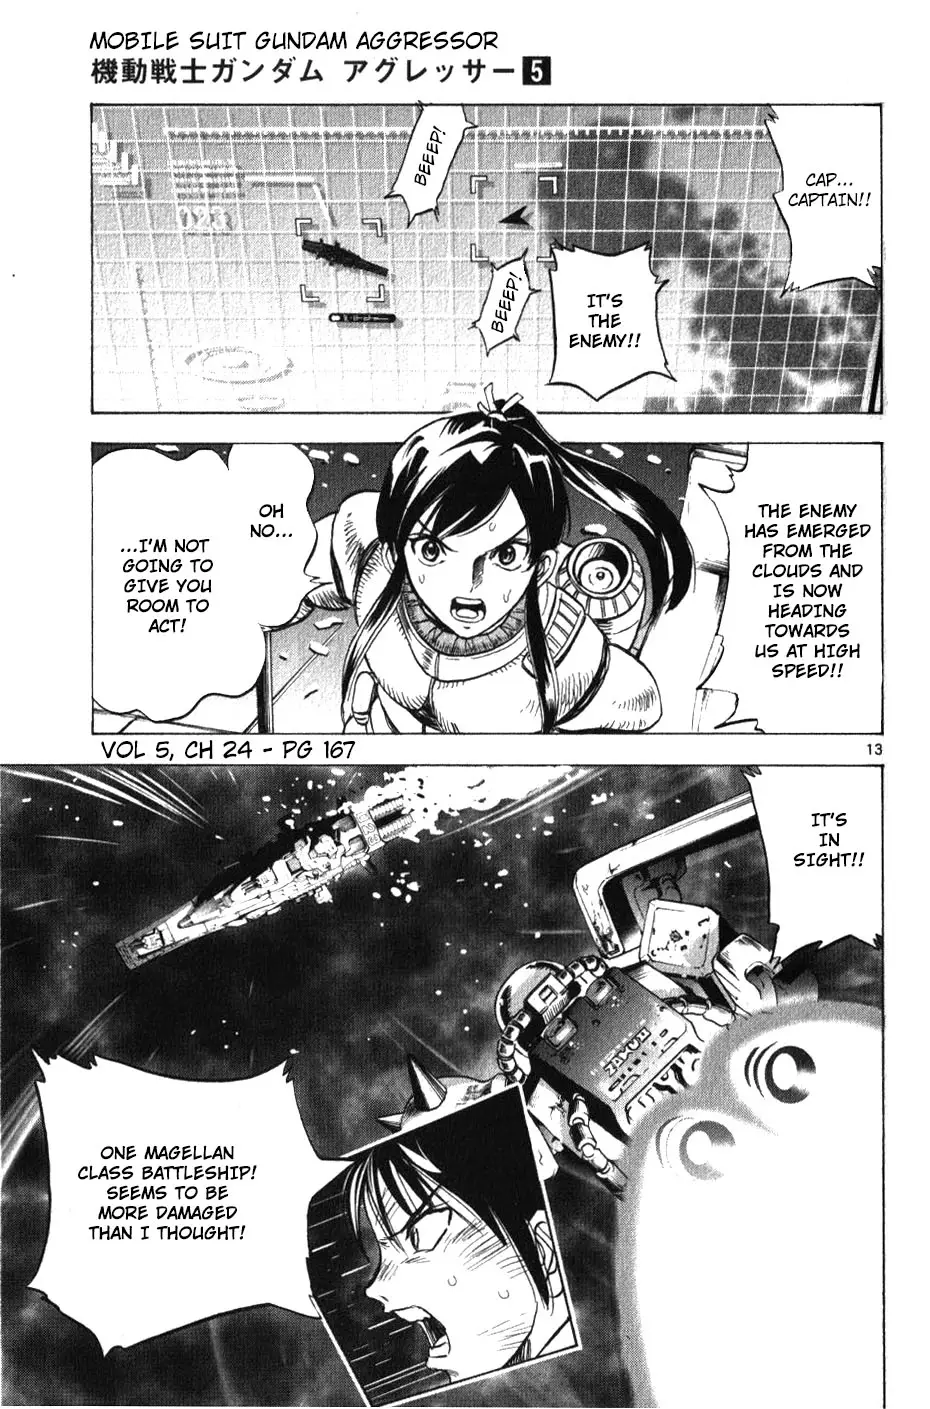 Mobile Suit Gundam Aggressor - 24 page 11-30123622